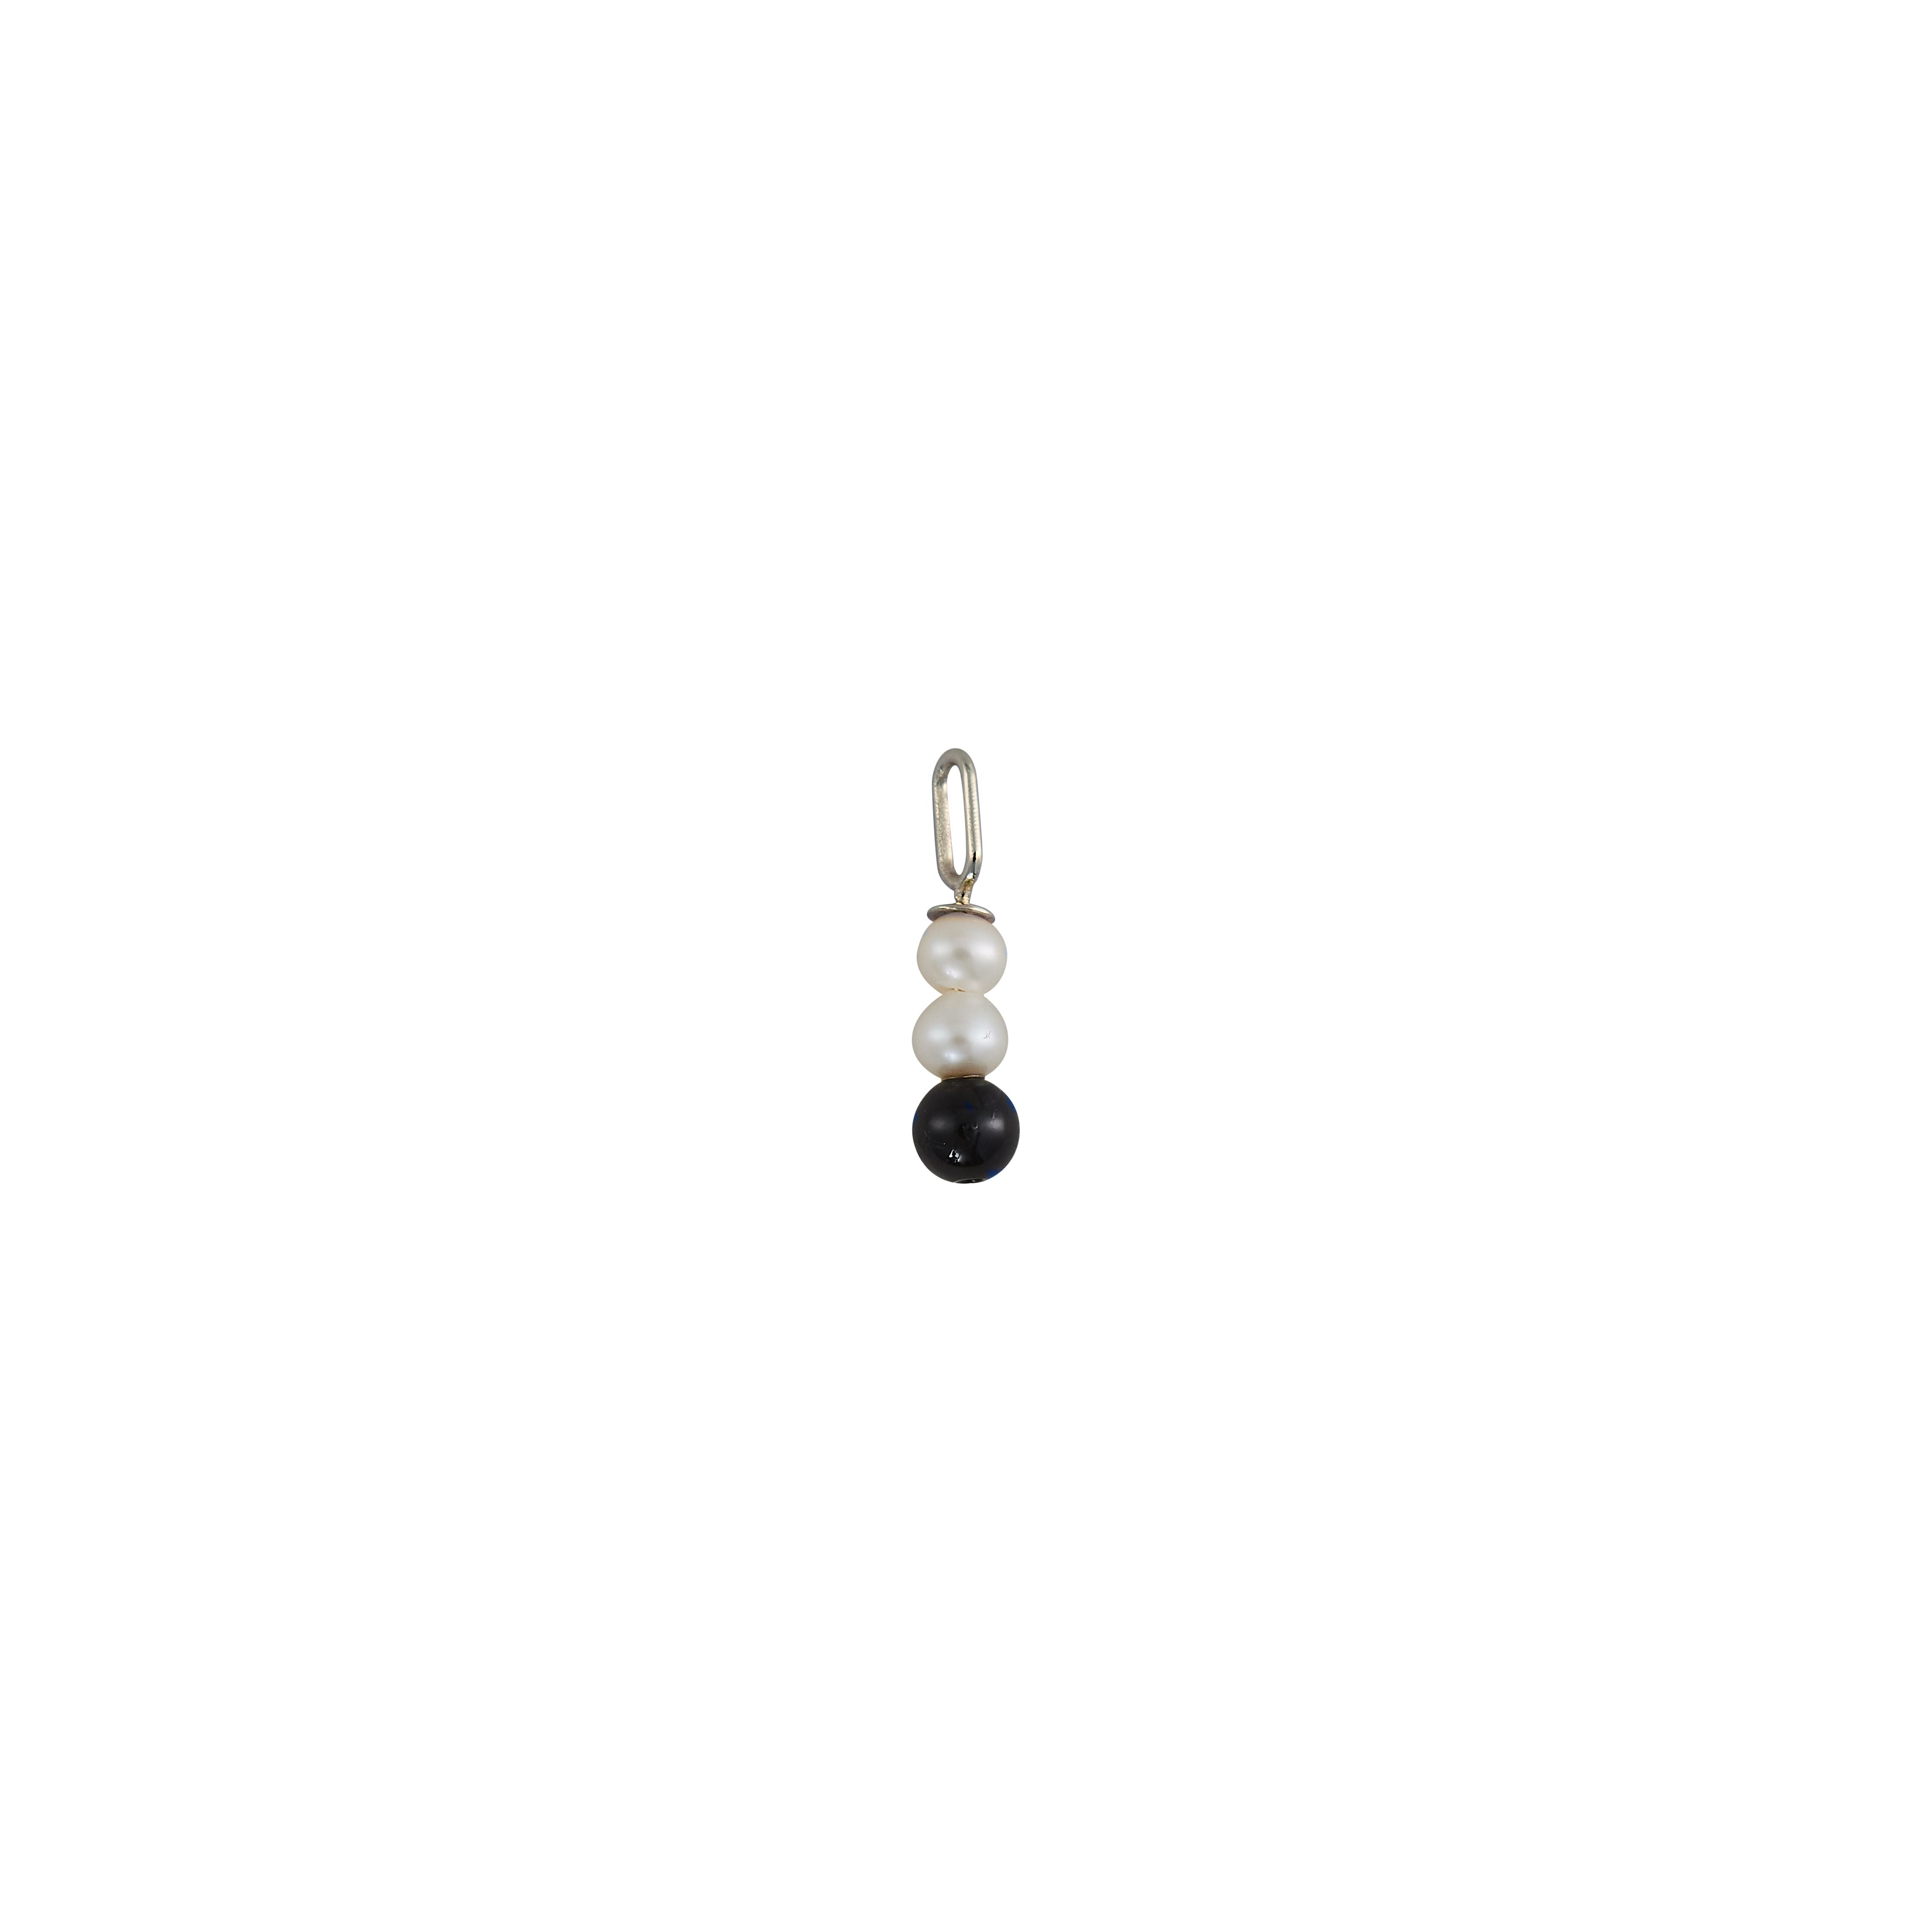 Design Letters Pearl Stick Charm 4 mm hängande silverpläterad, svart agat